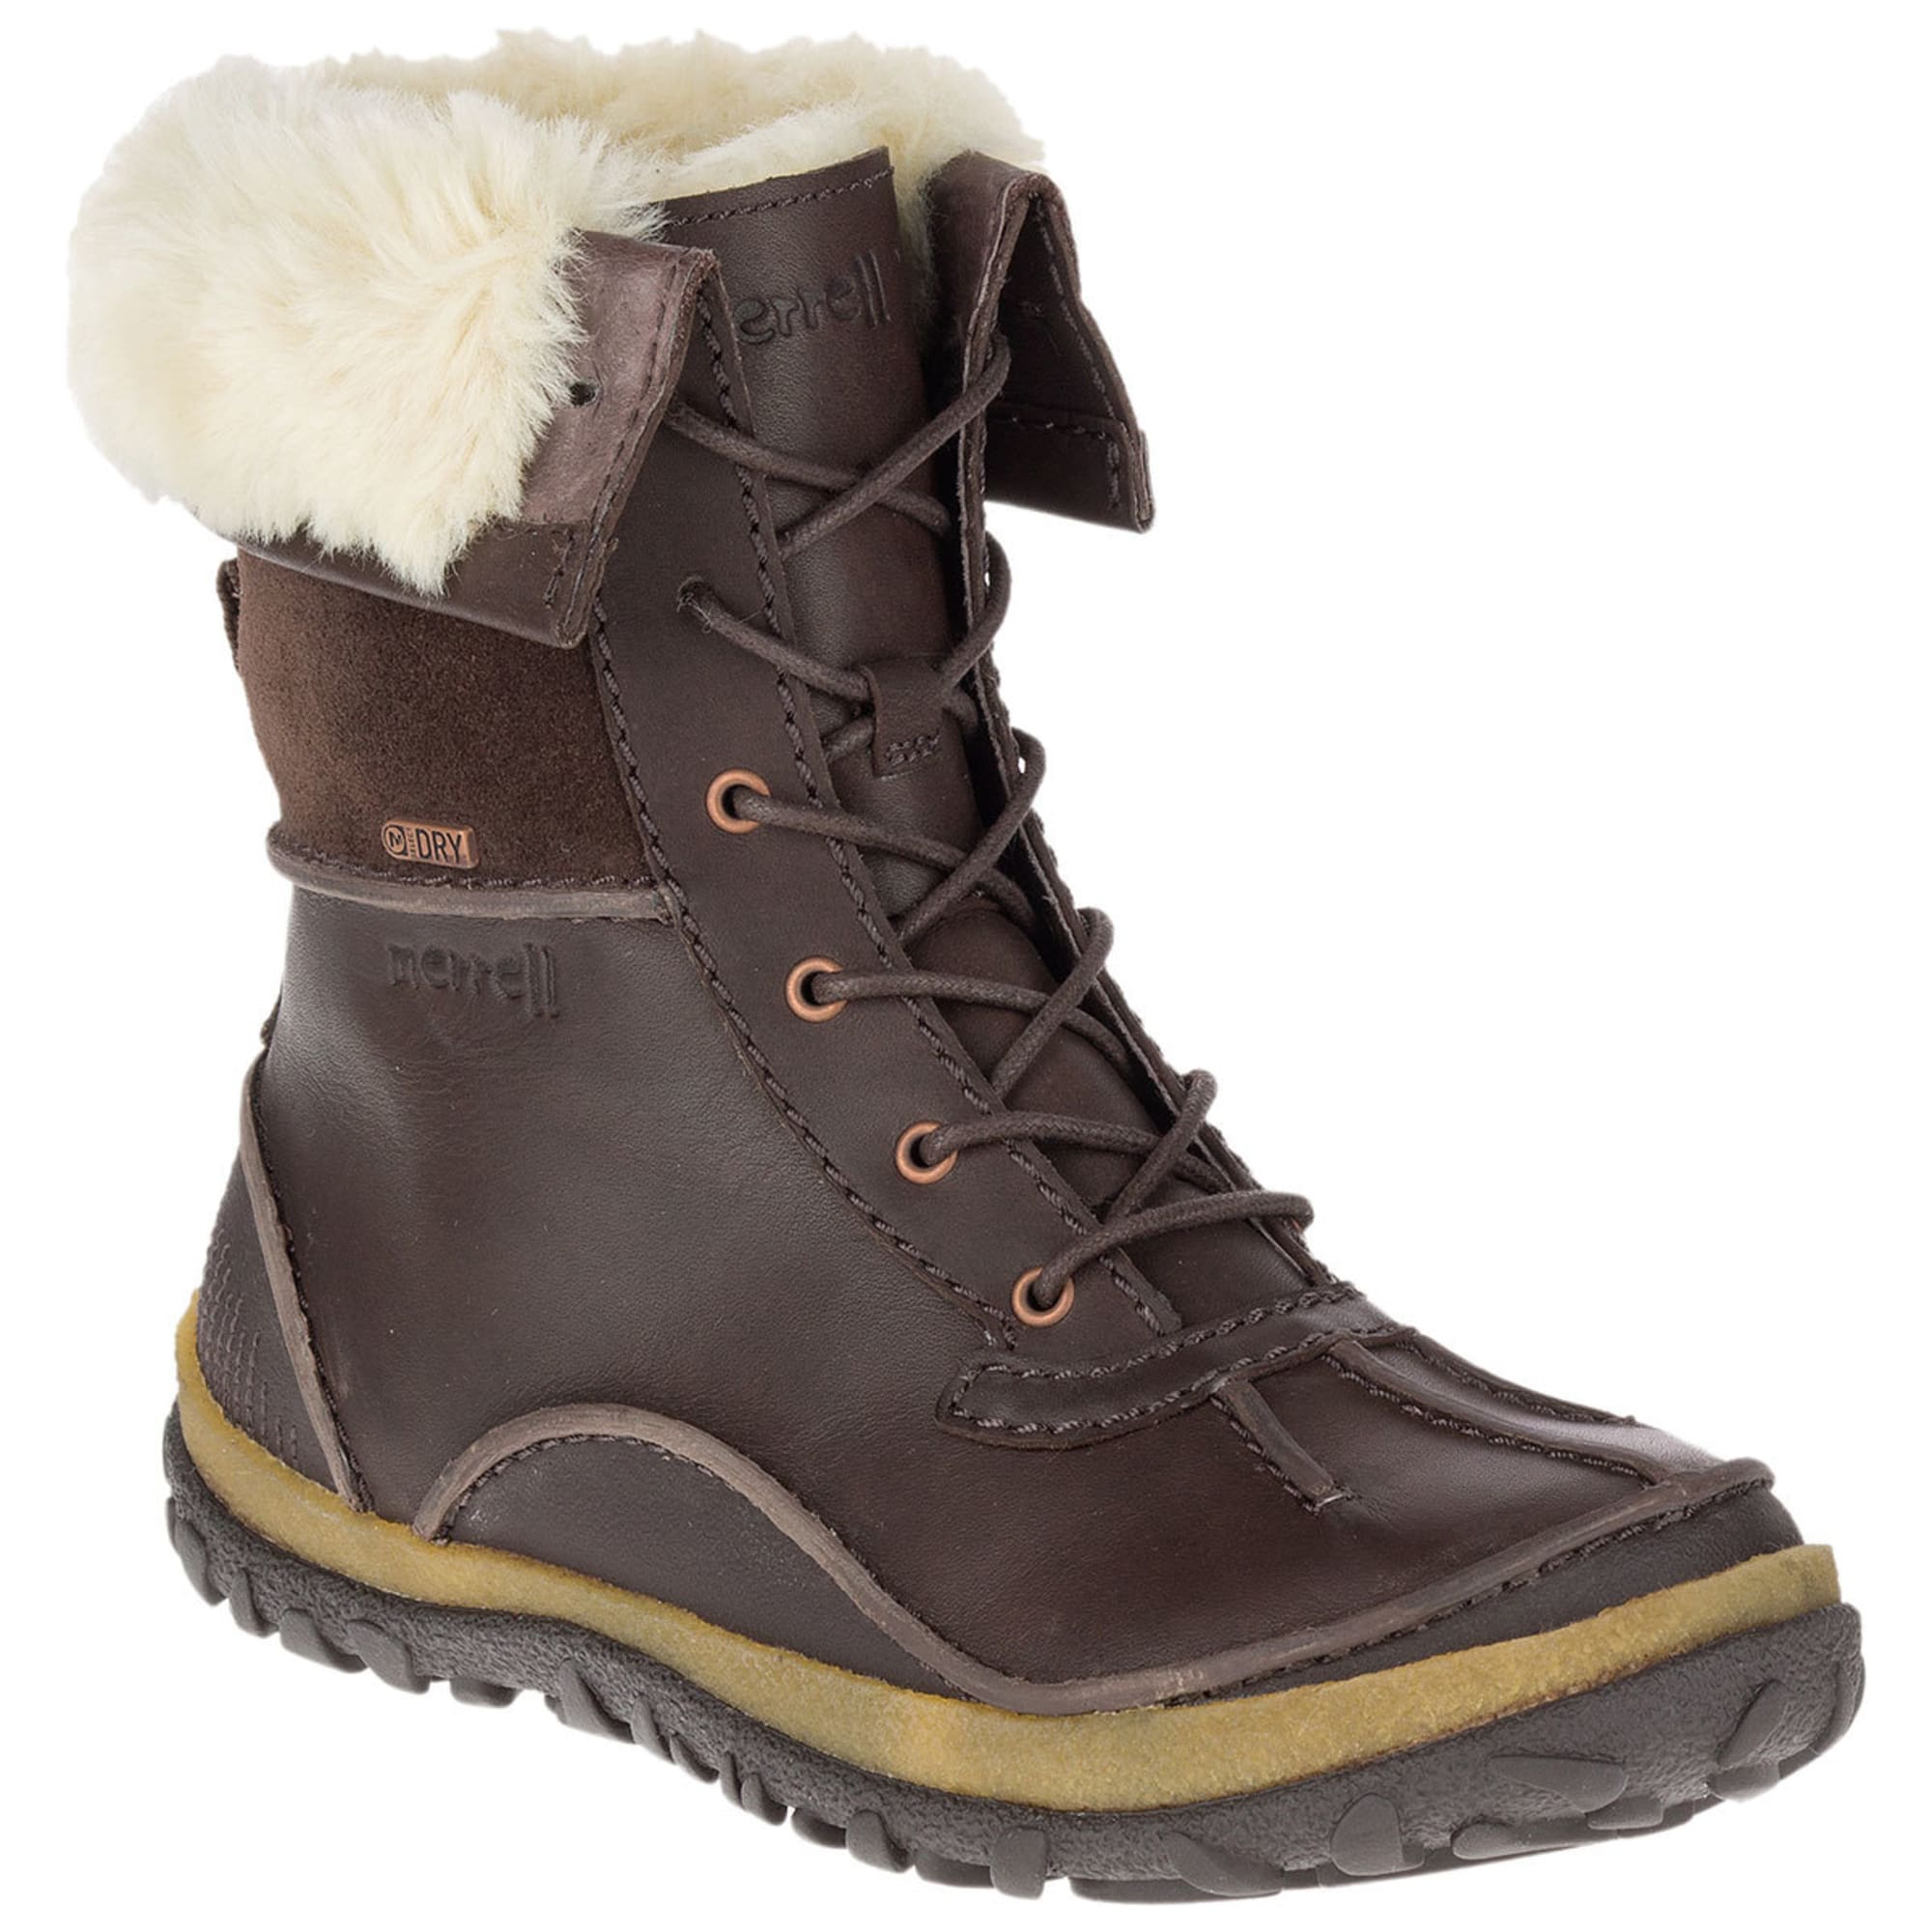 MERRELL Women's Tremblant Mid Polar Waterproof Boots, Espresso - Mountain Sports